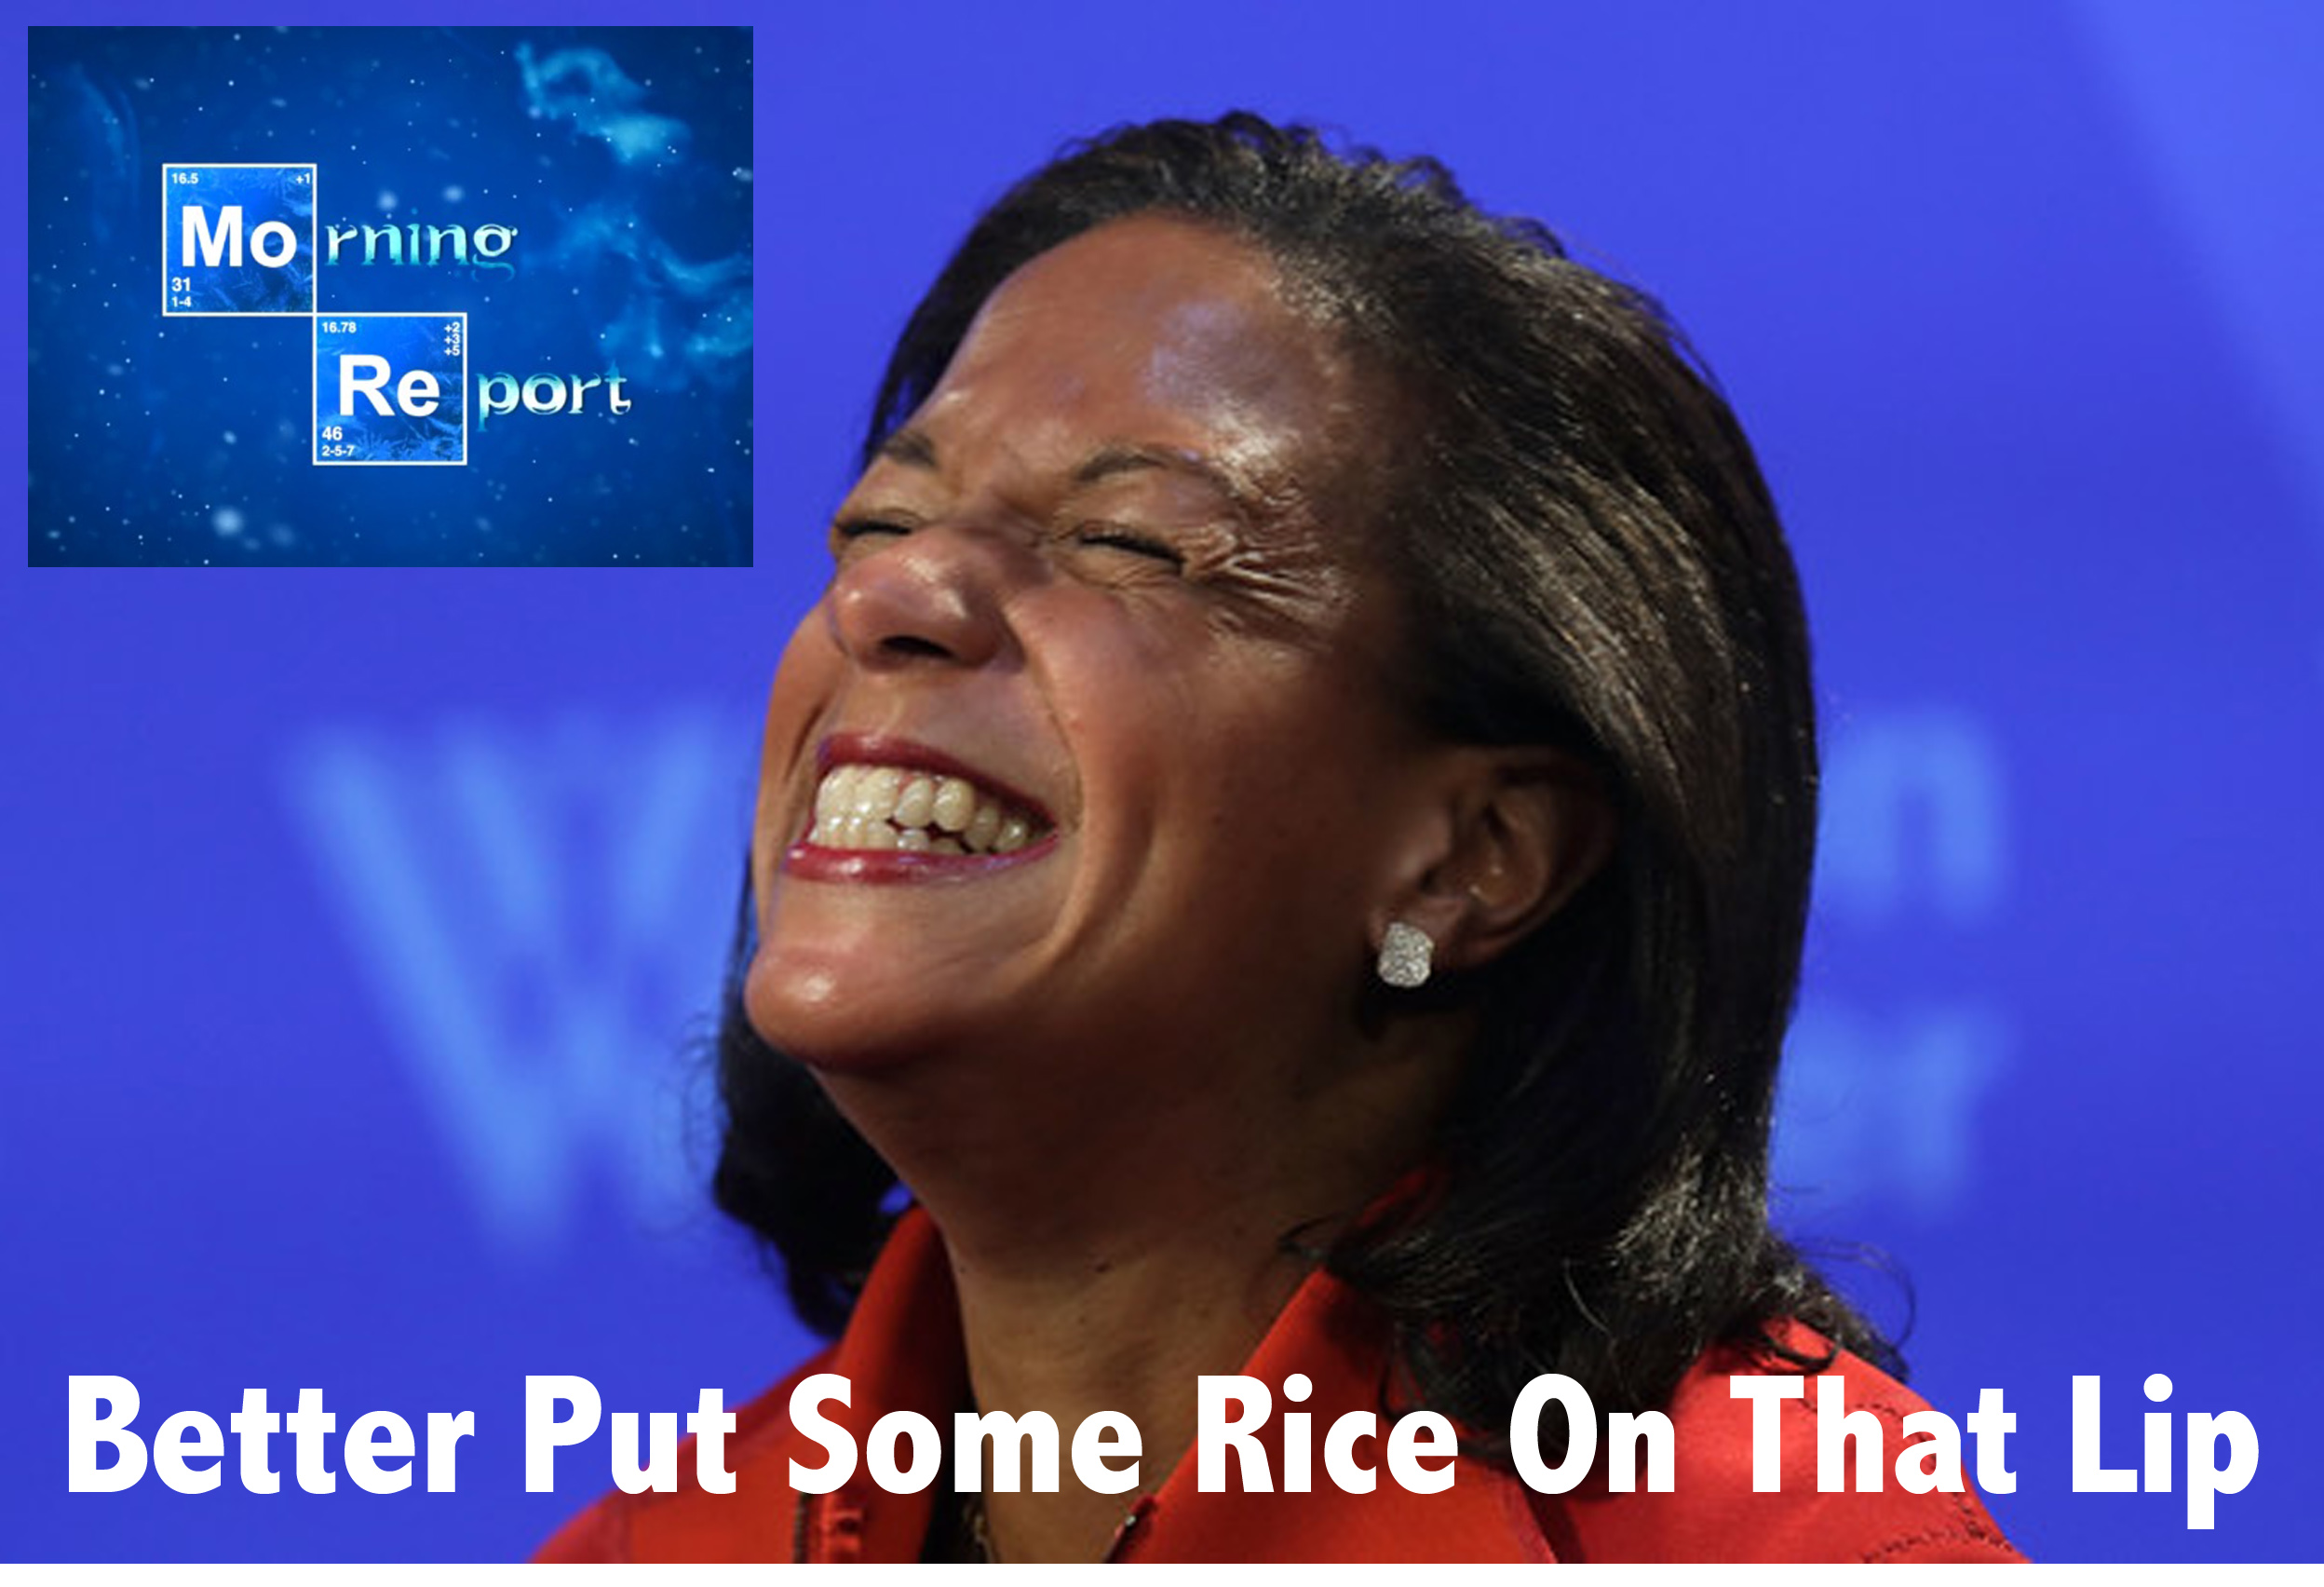 Rice.jpg